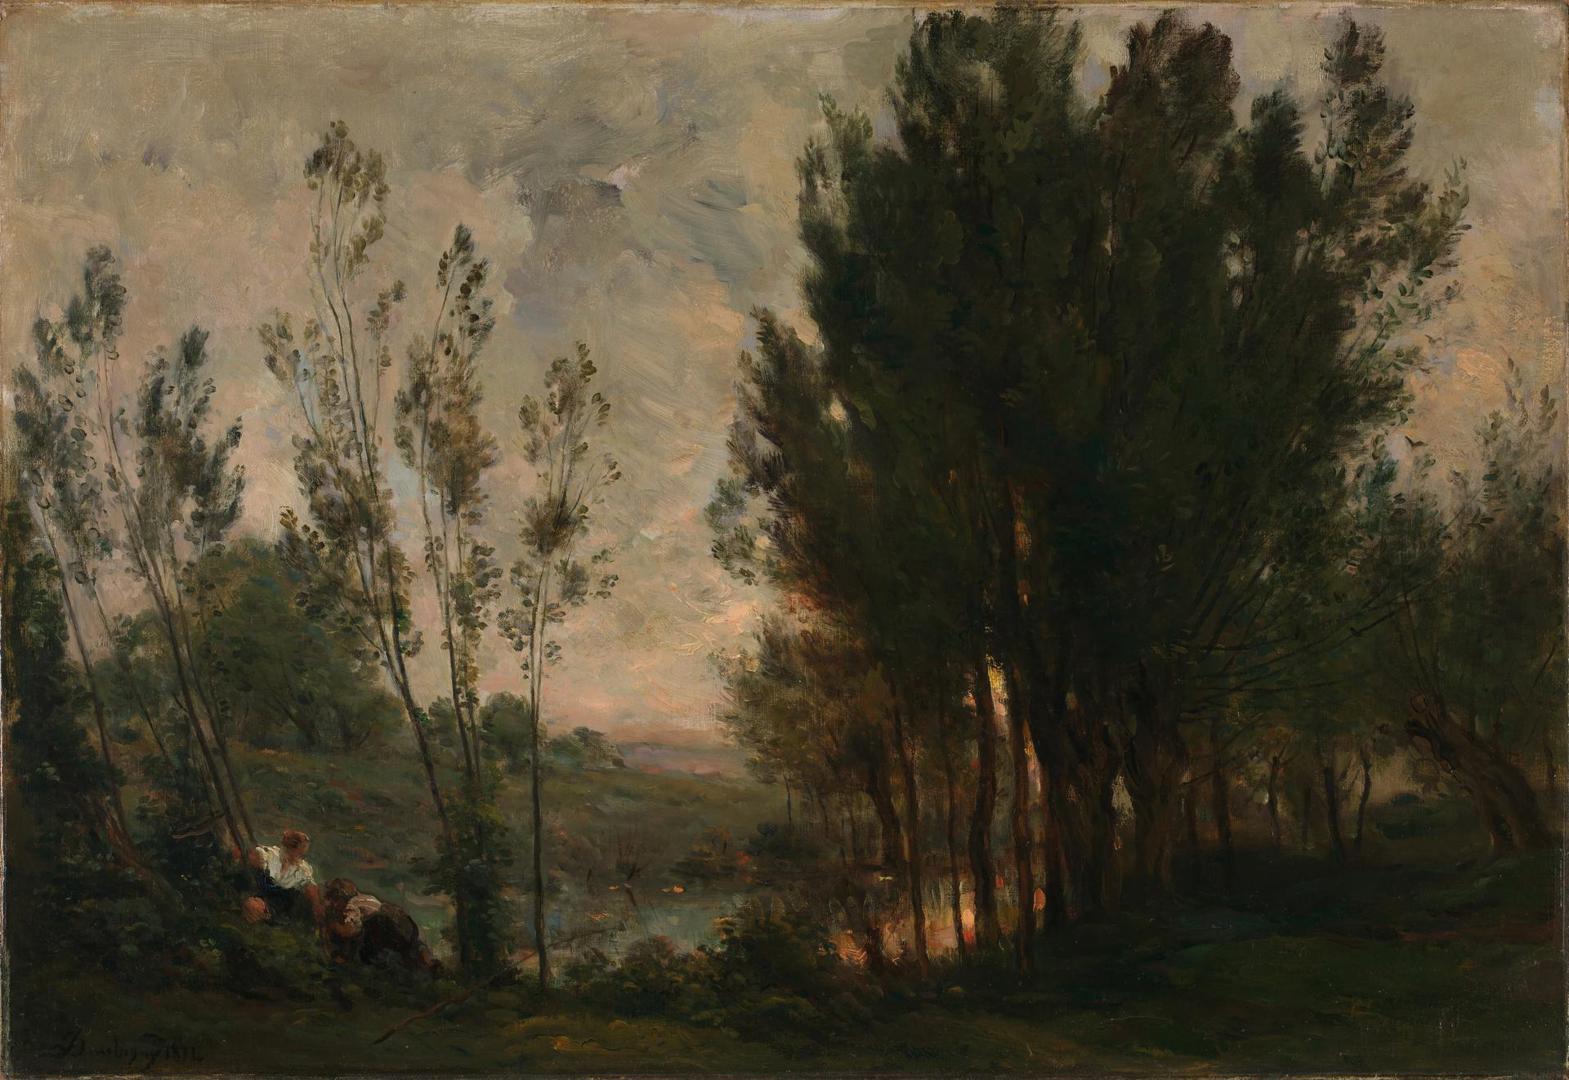 Willows by Charles-François Daubigny